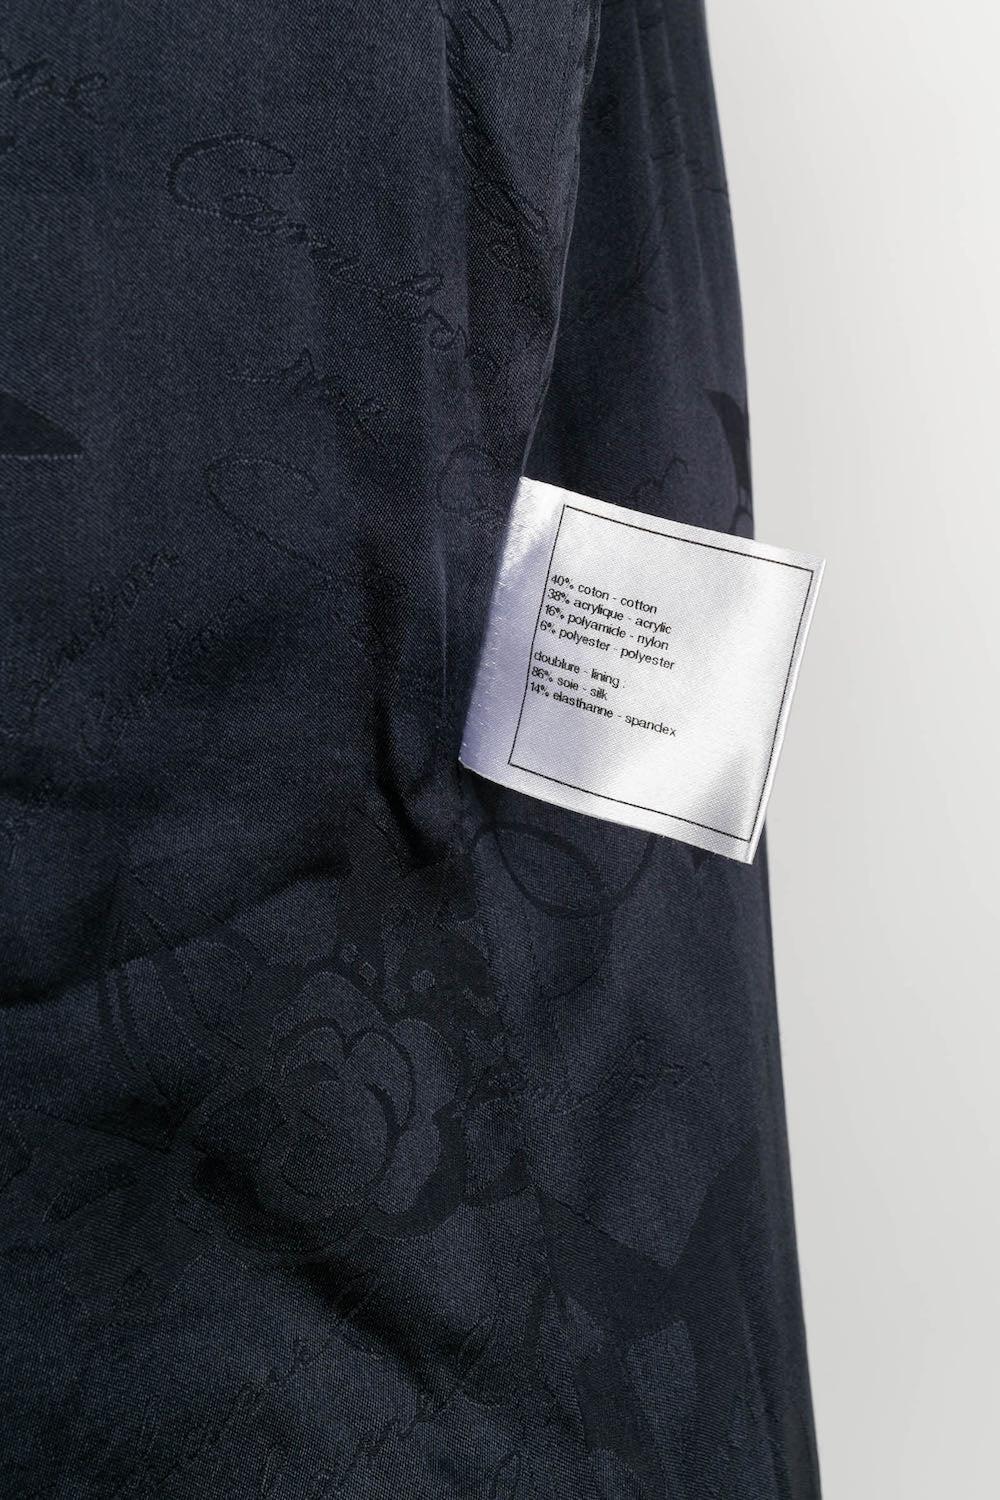 Chanel Dark Blue Tweed Jacket with Wool Trim For Sale 5